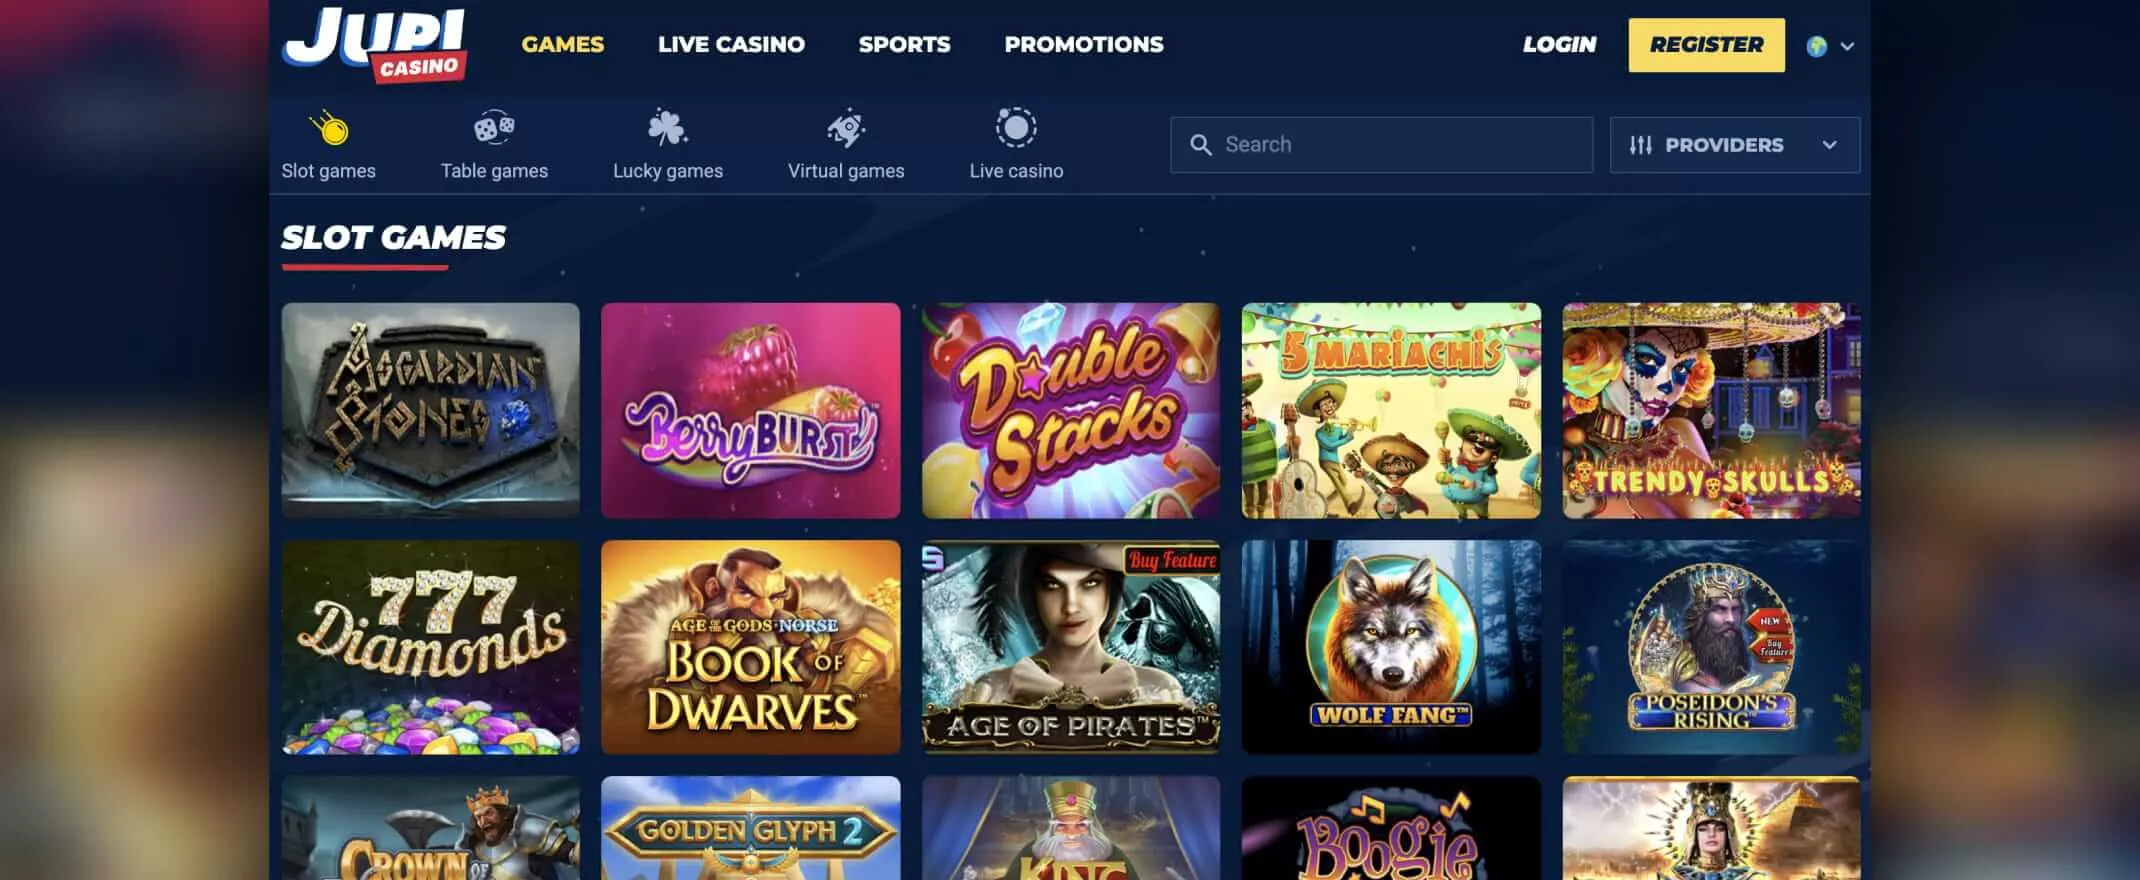 Games screenshot of Jupi Casino